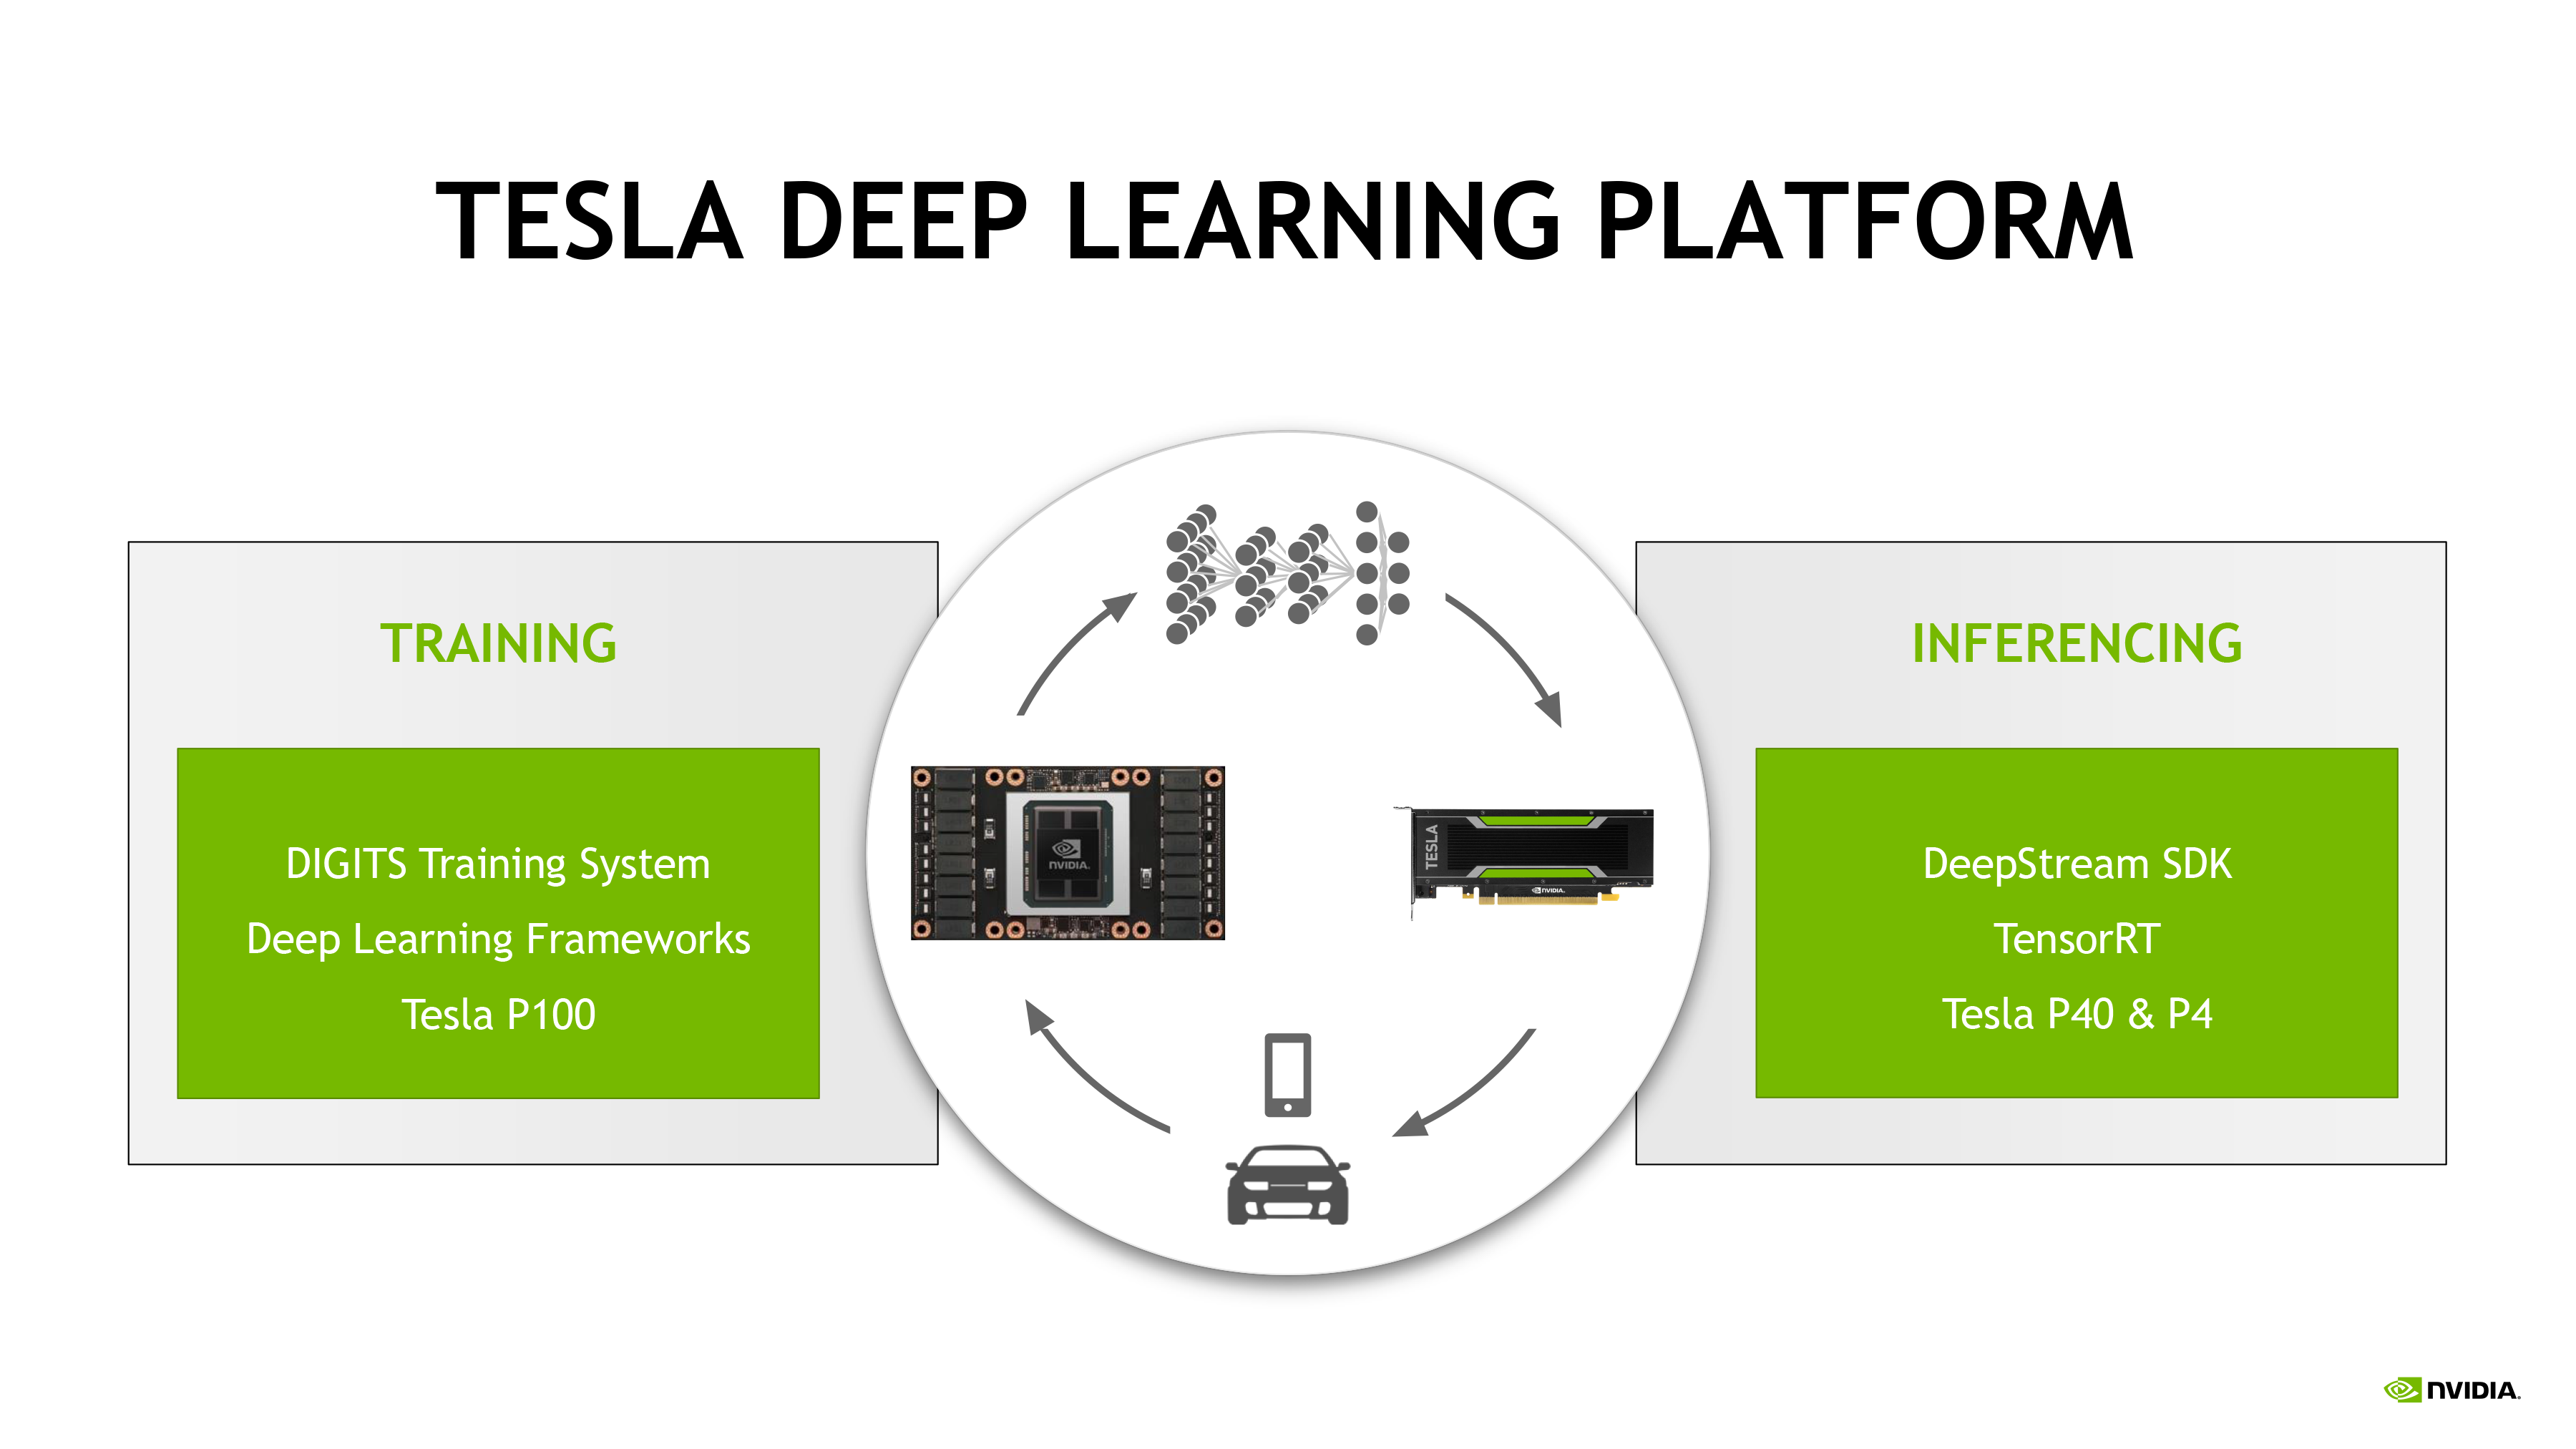 escaldadura Mal funcionamiento elegante NVIDIA Announces Tesla P40 & Tesla P4 - Neural Network Inference, Big &  Small